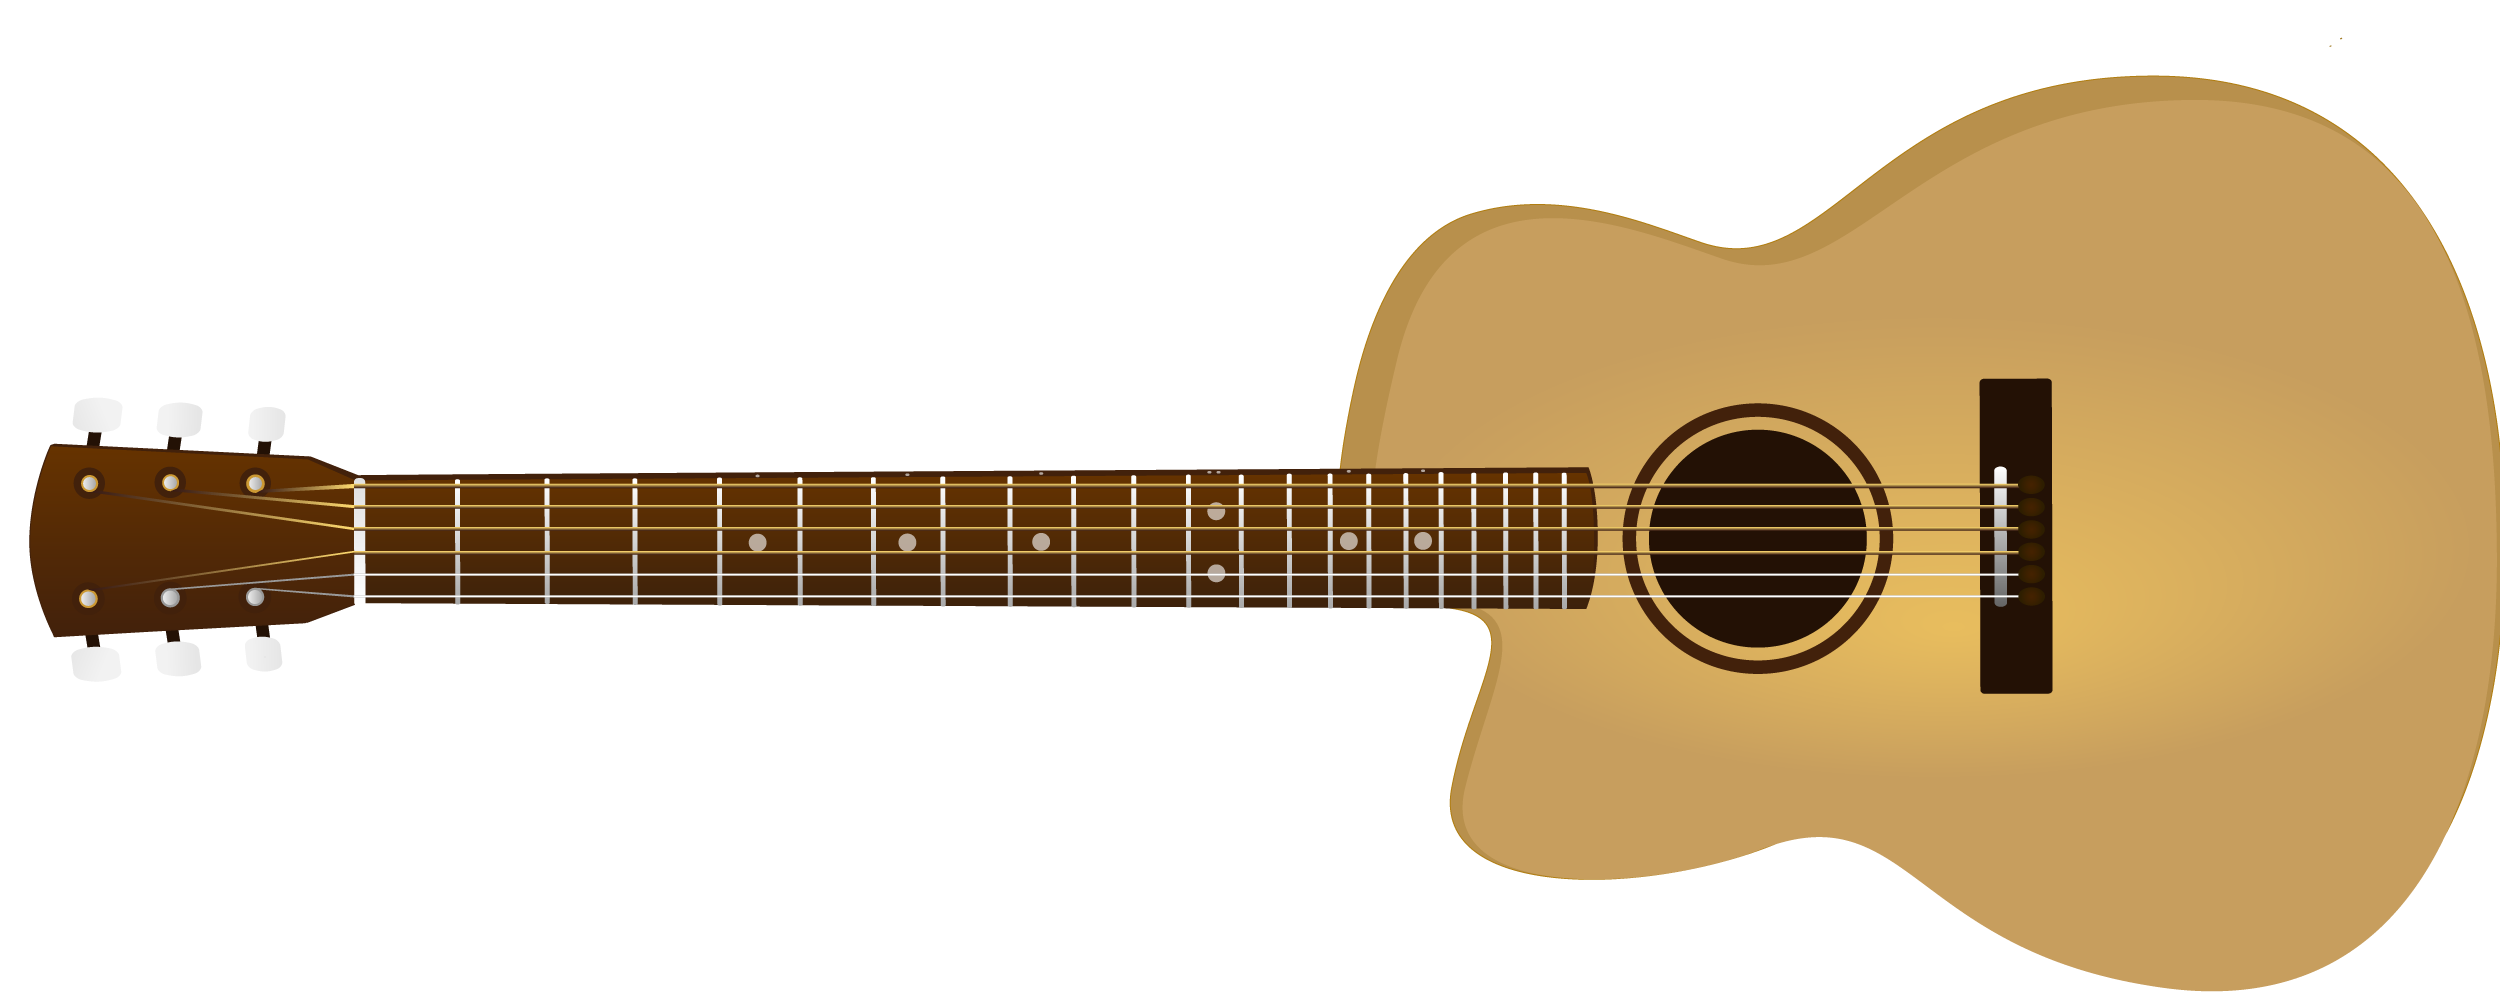 Guitar PNG Image Background